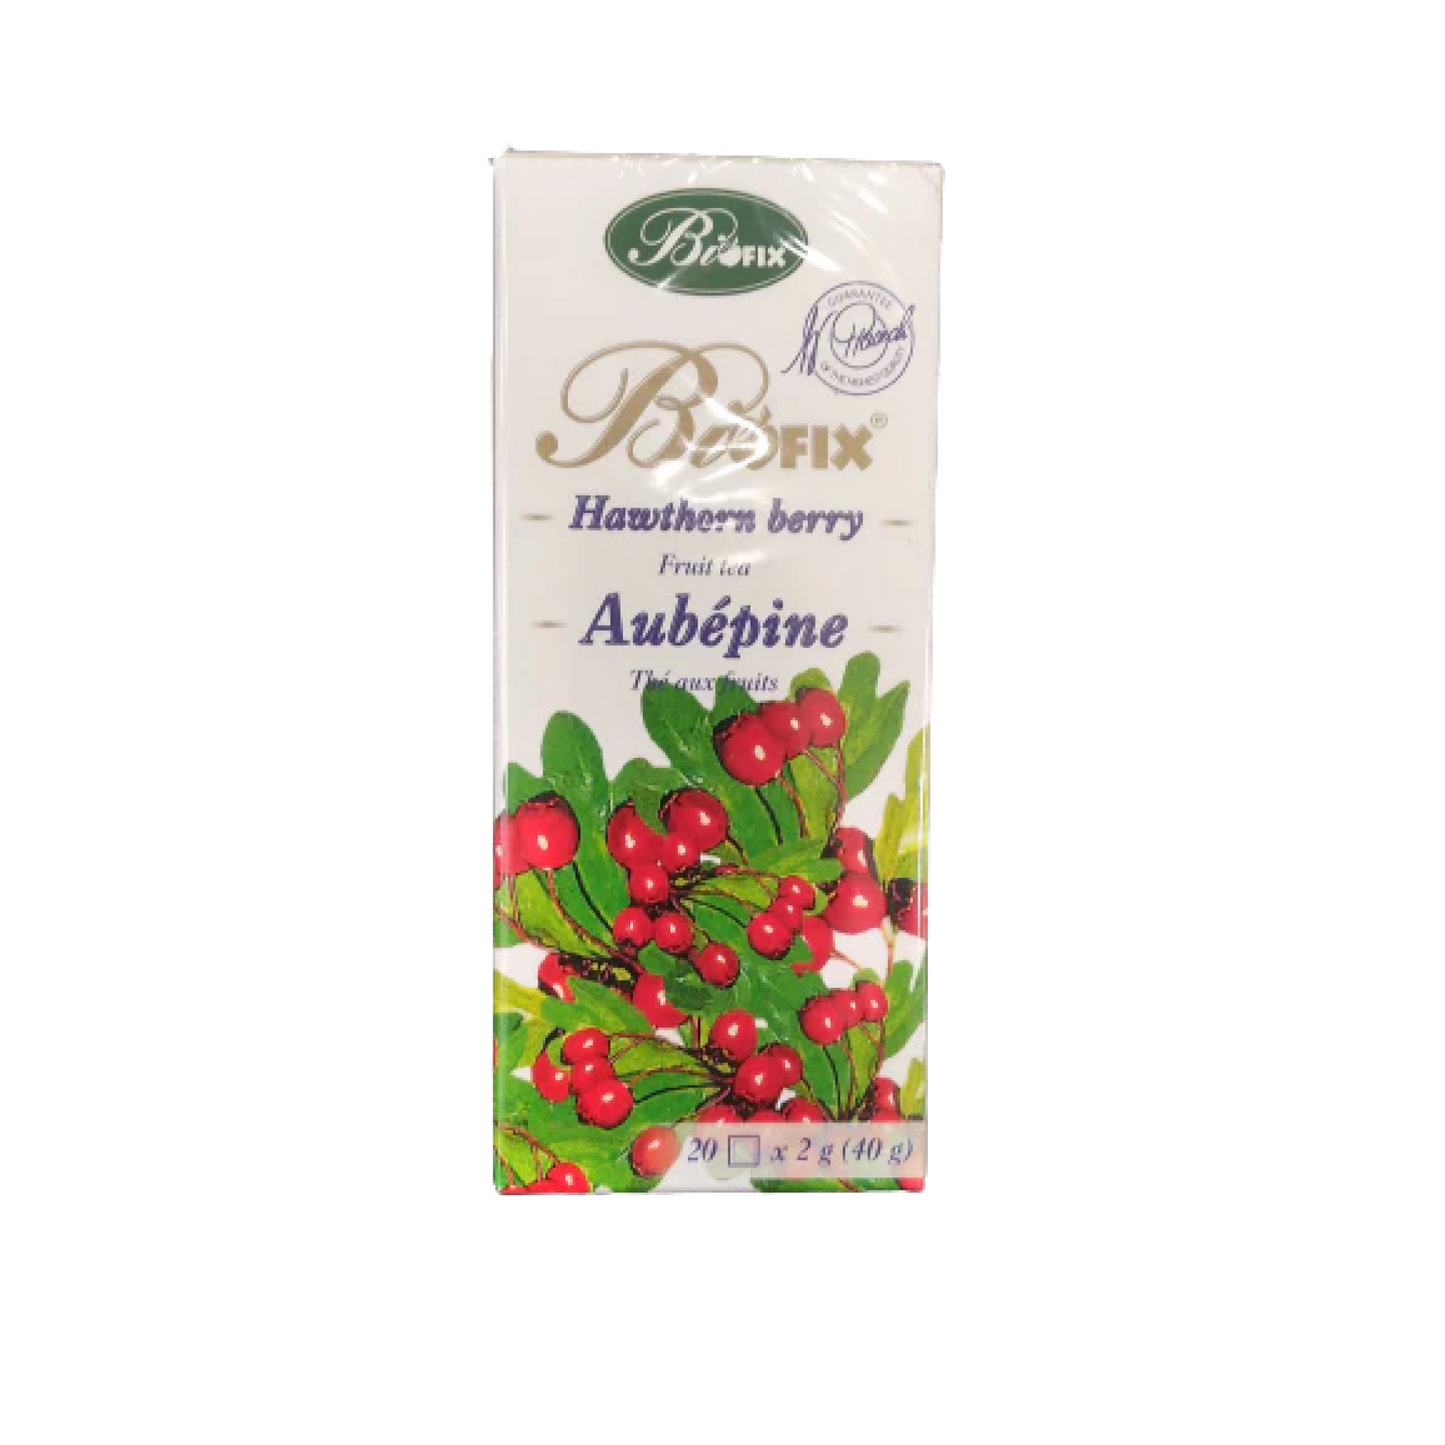 Biofix Hawthorn Berry Fruit Tea 40g